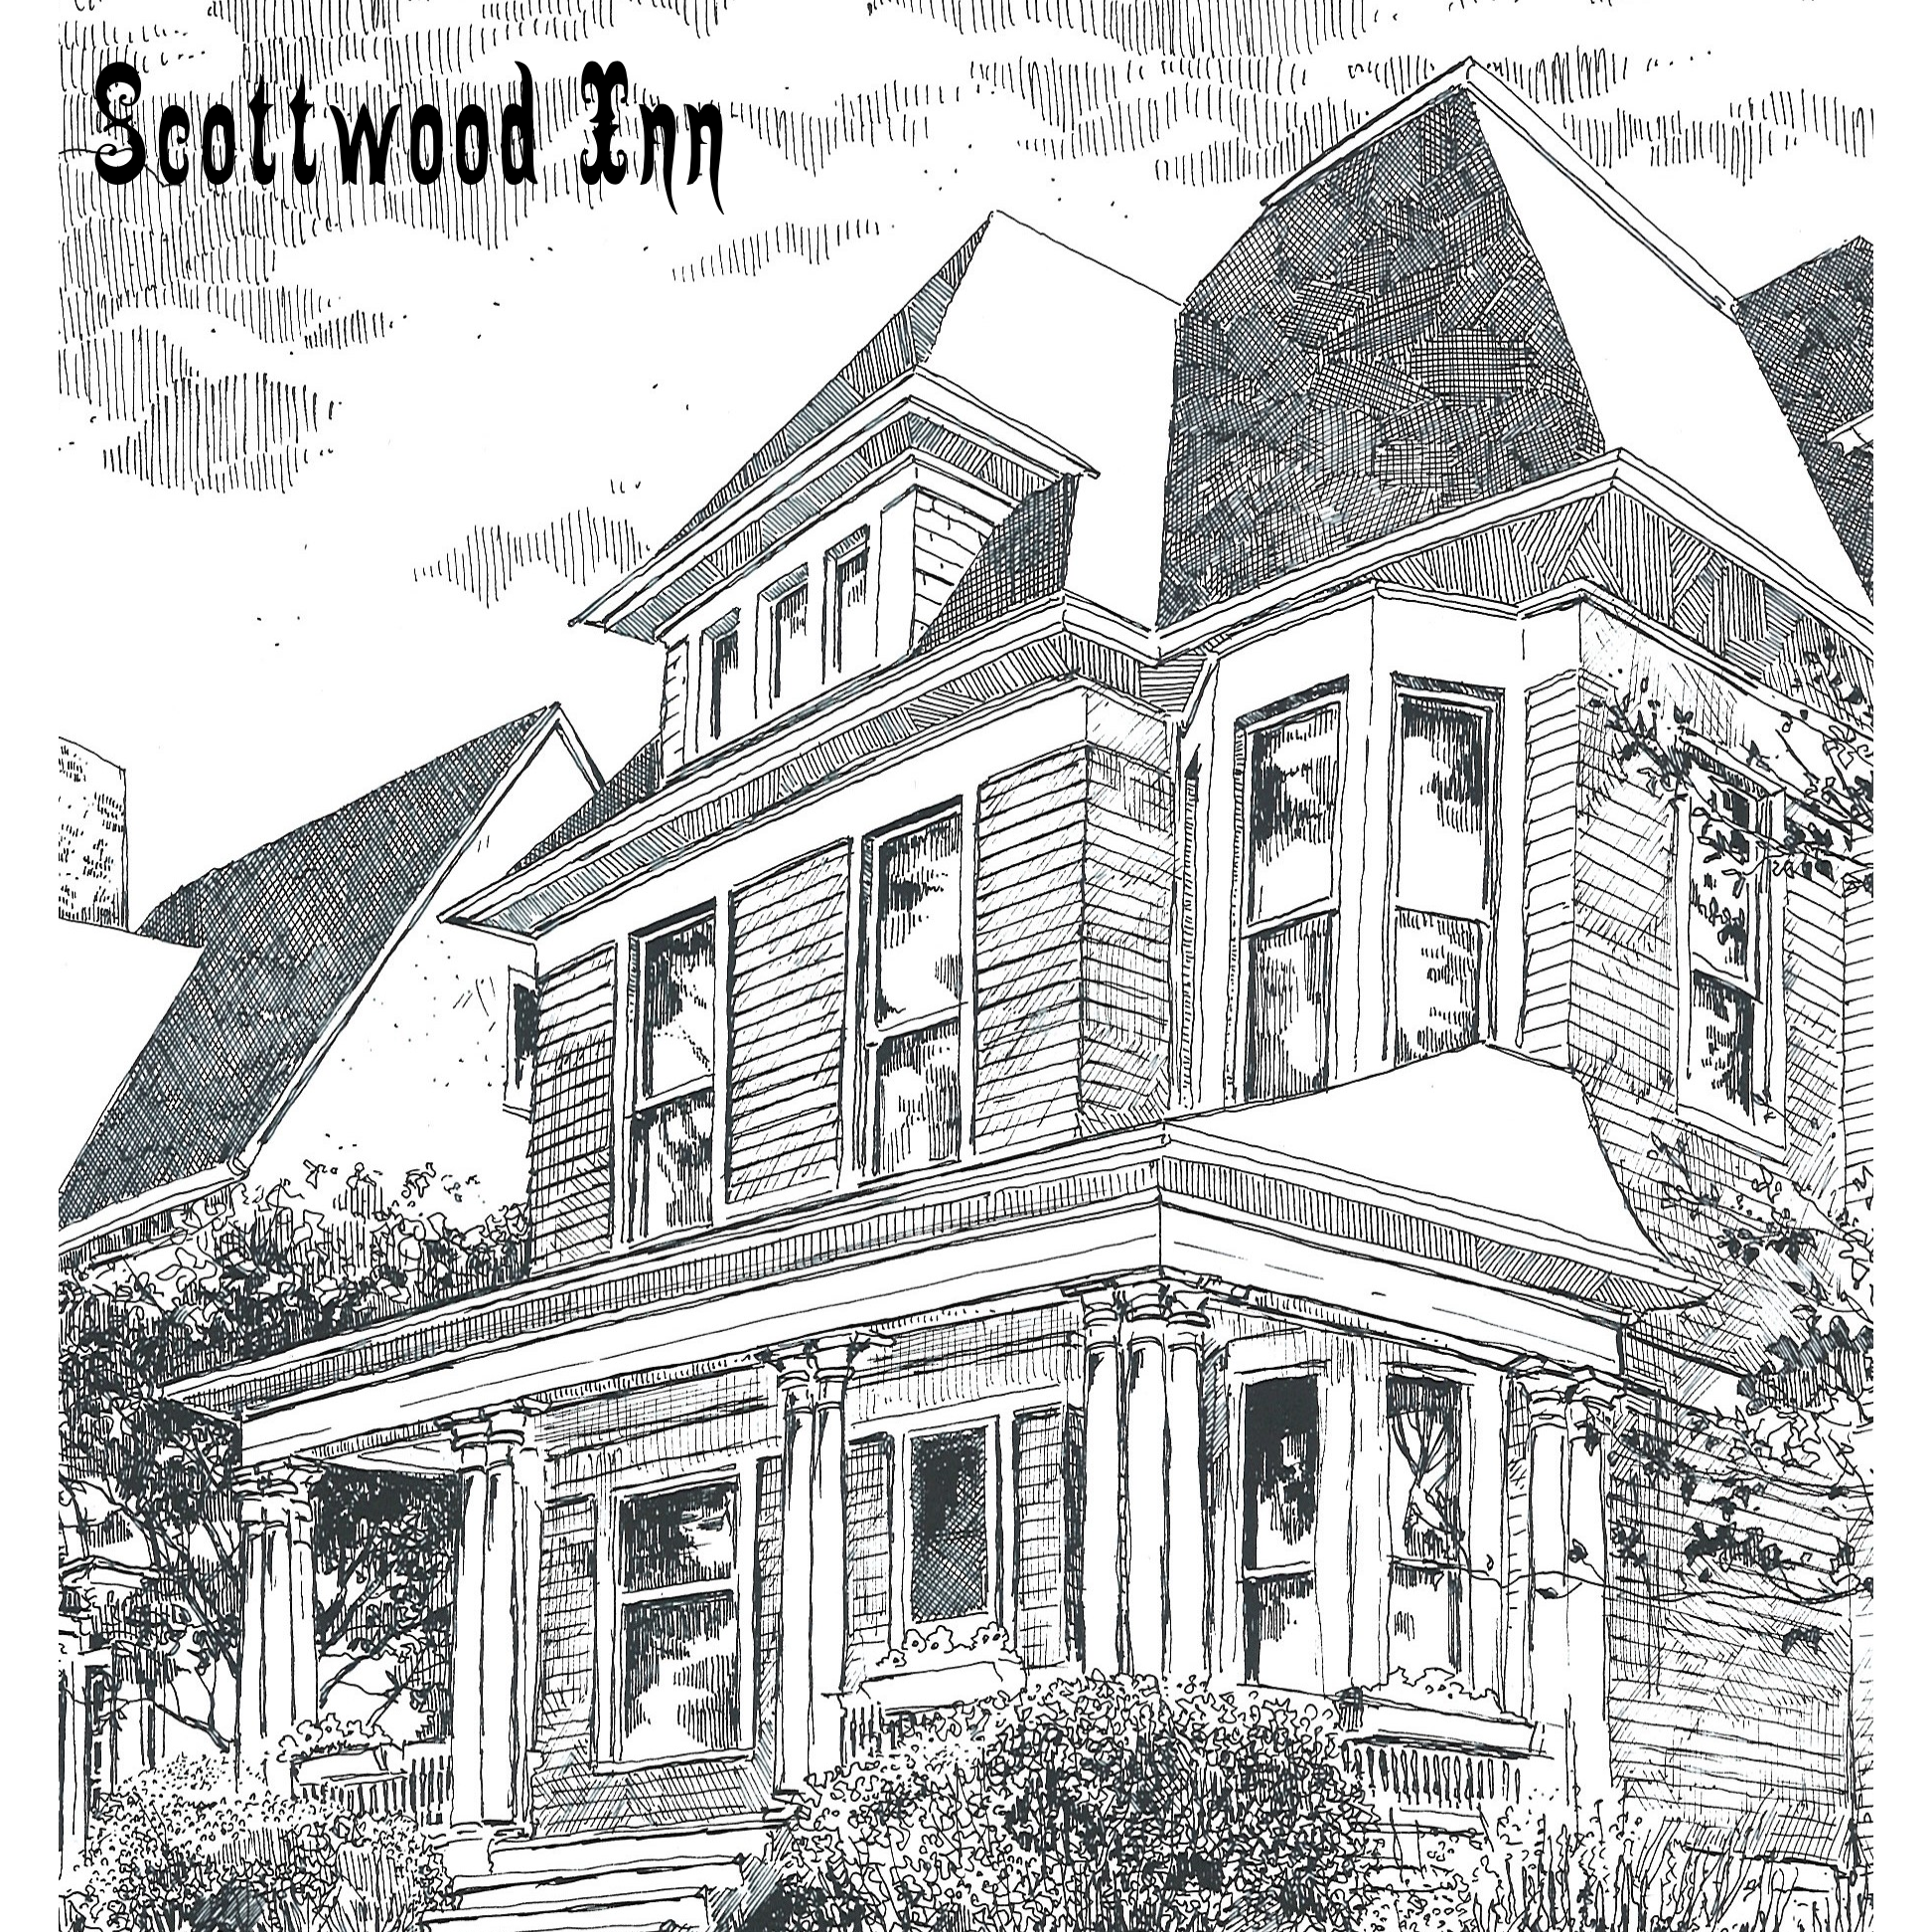 Scottwood Inn - Toledo, OH 43620 - (419)242-4551 | ShowMeLocal.com